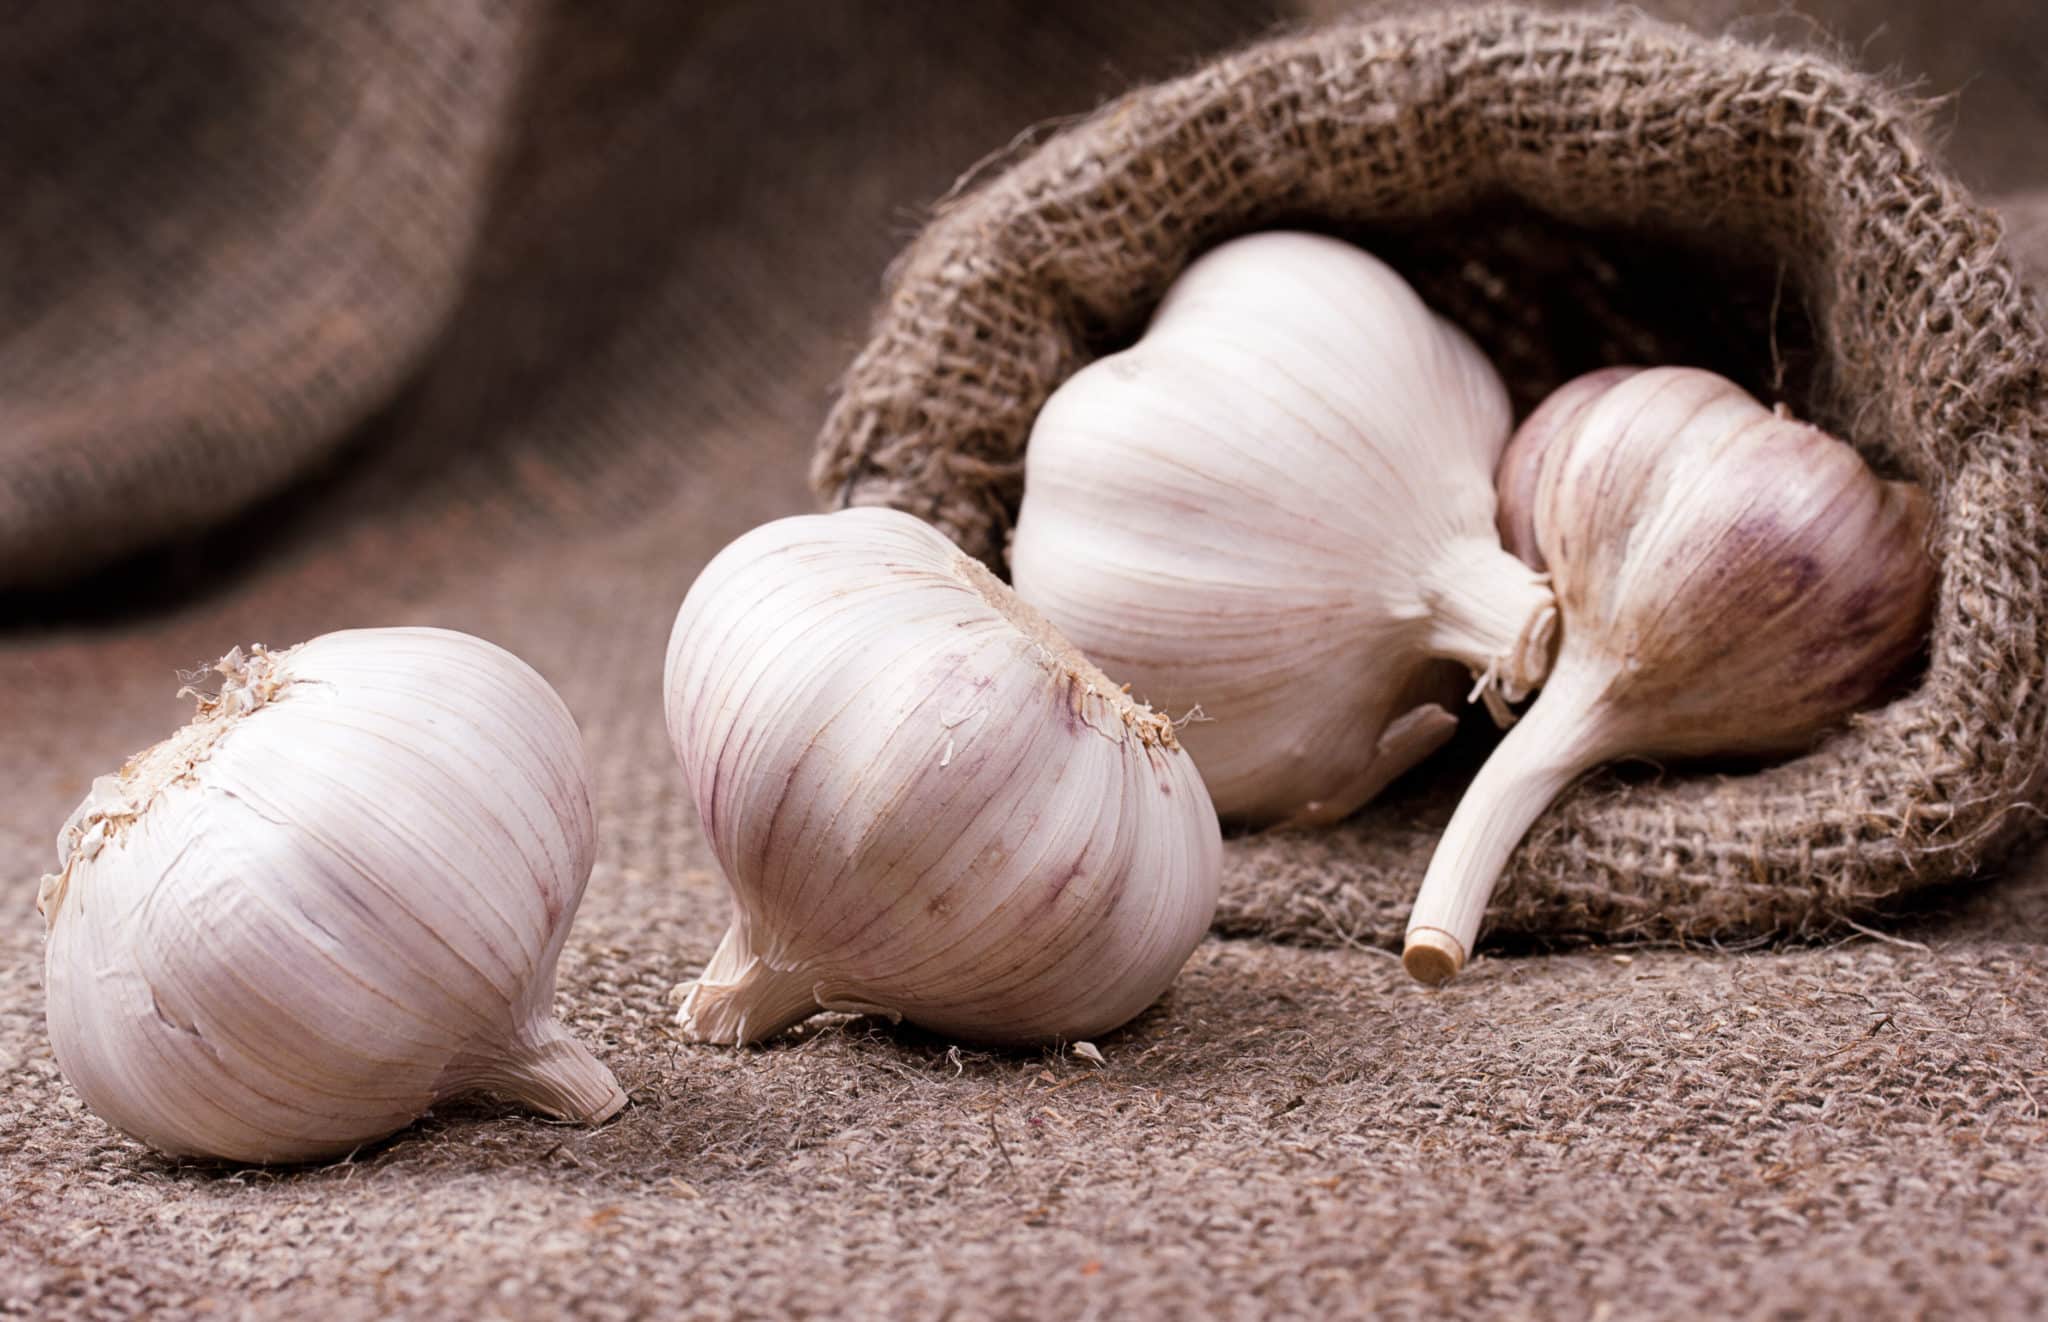 Bulbs of garlic on burlap cloth